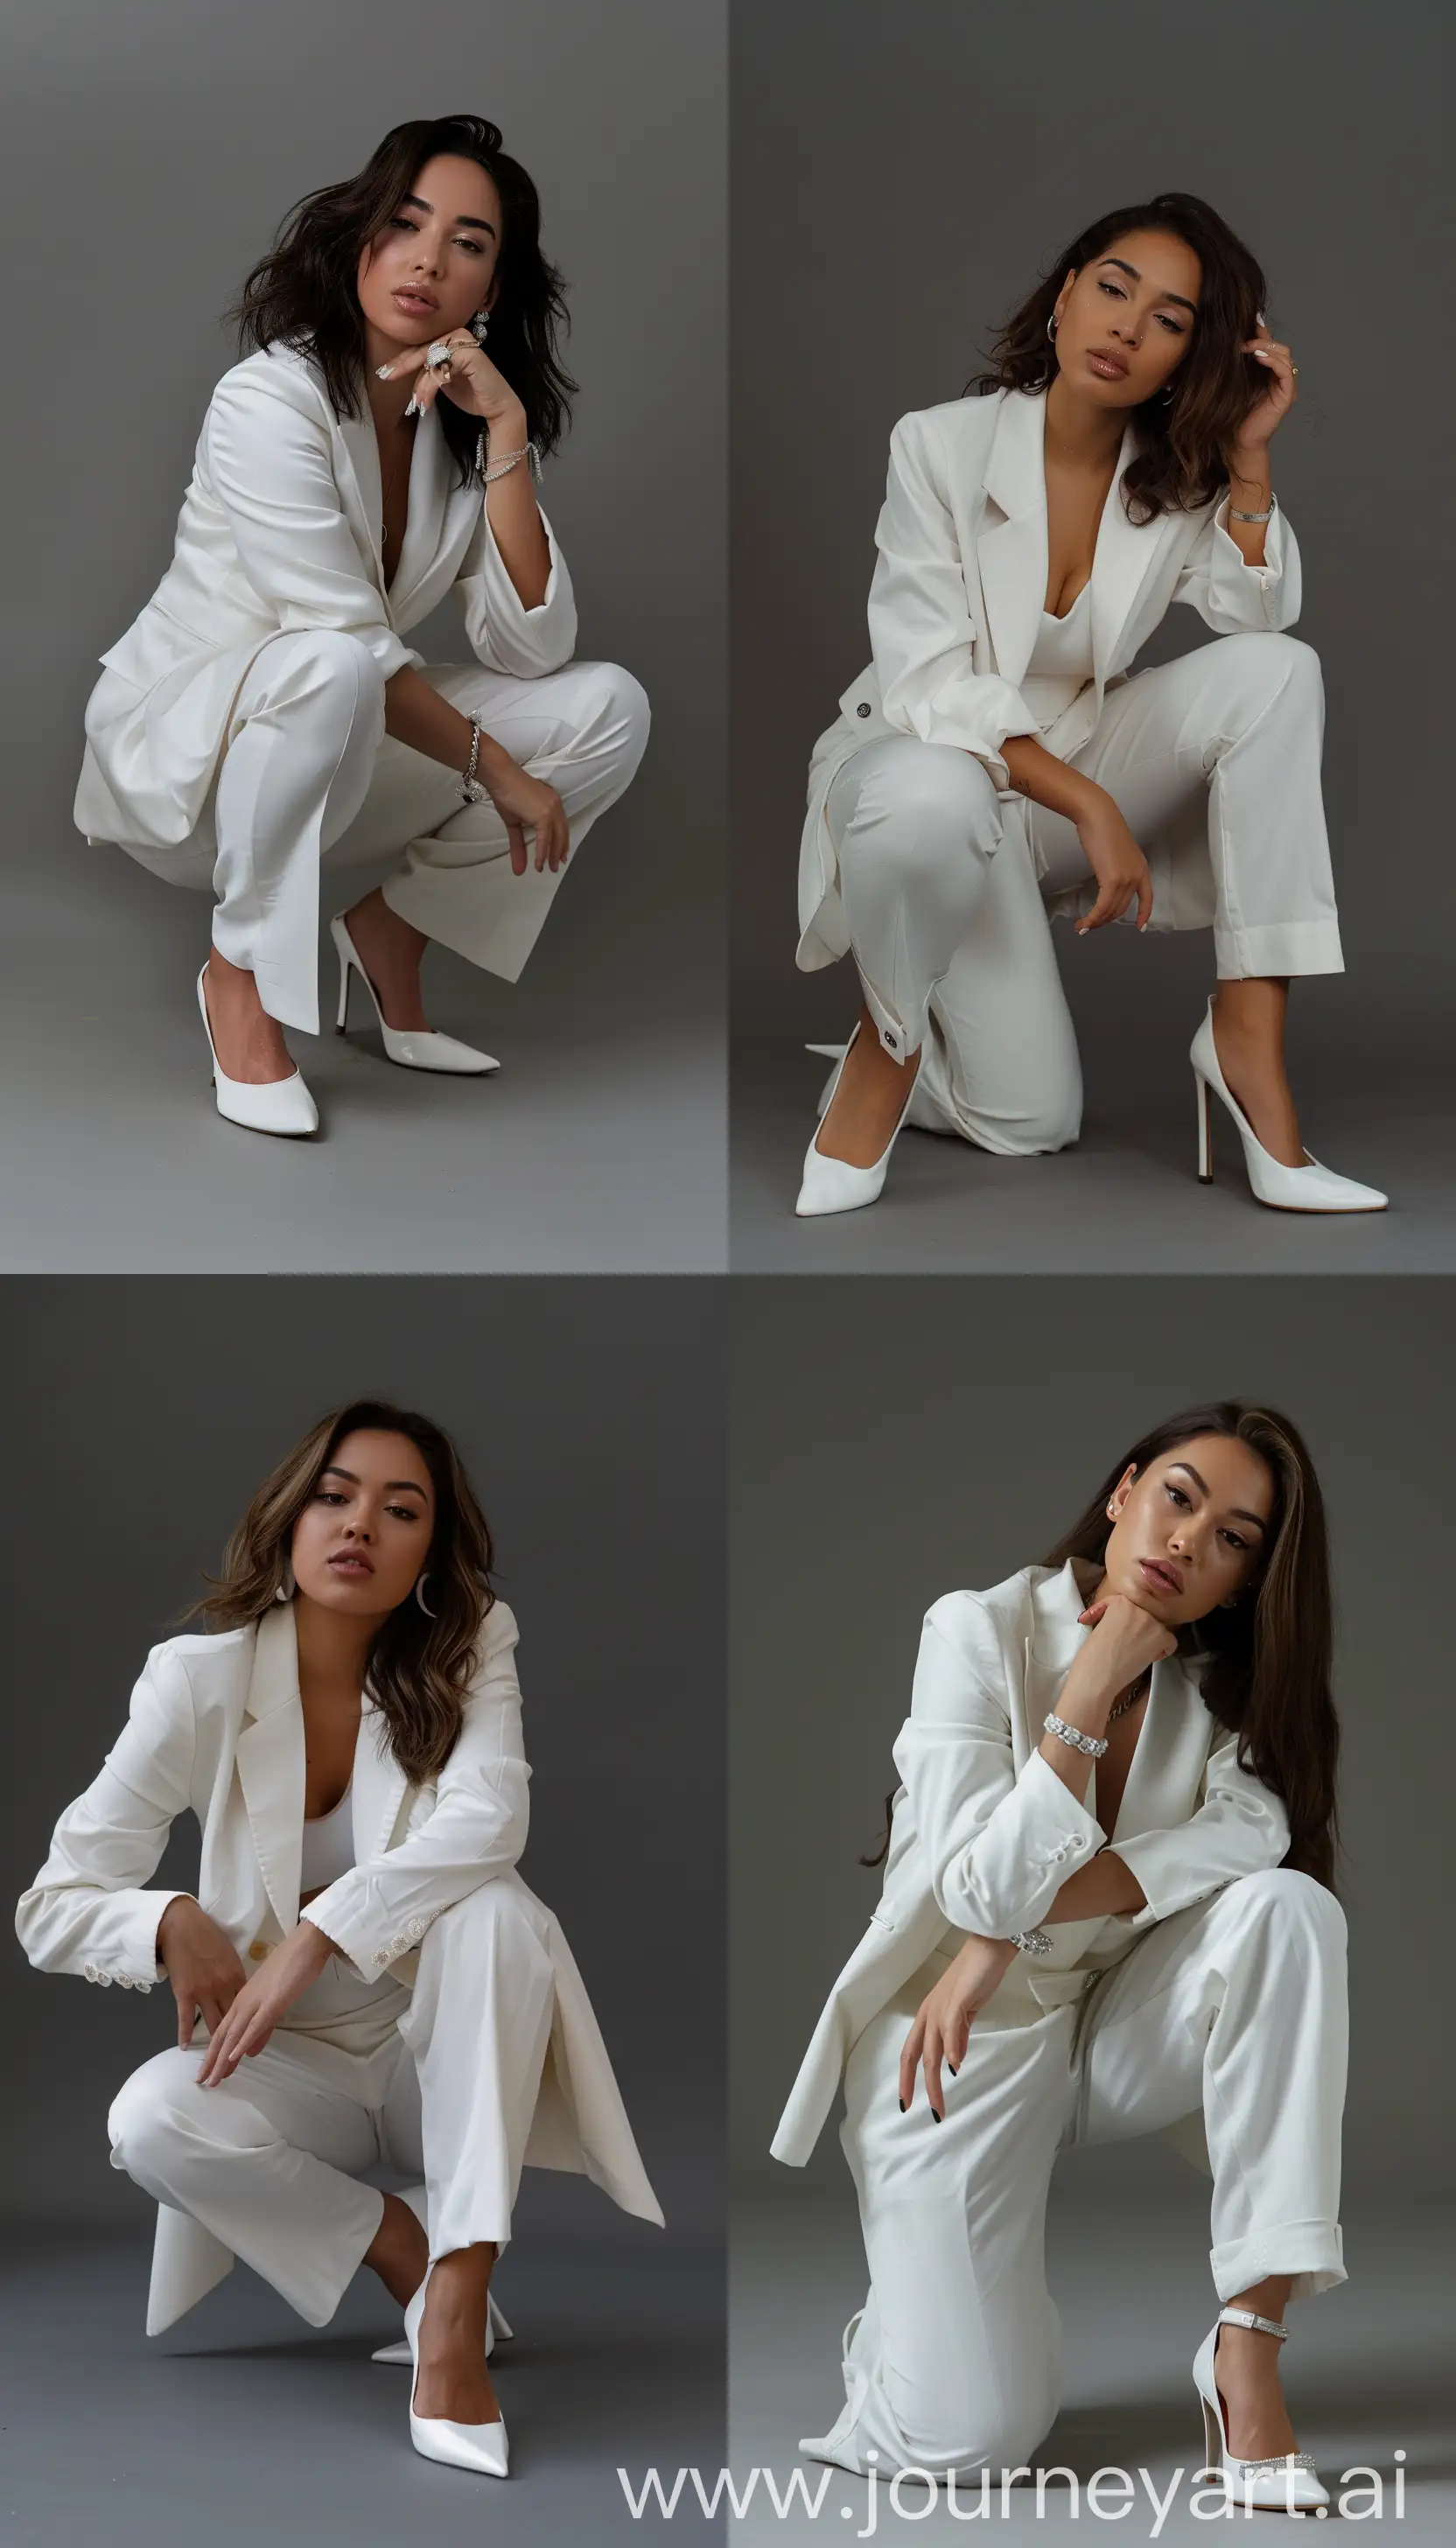 Elegant-White-Attire-Stylish-Woman-Poses-for-Studio-Photo